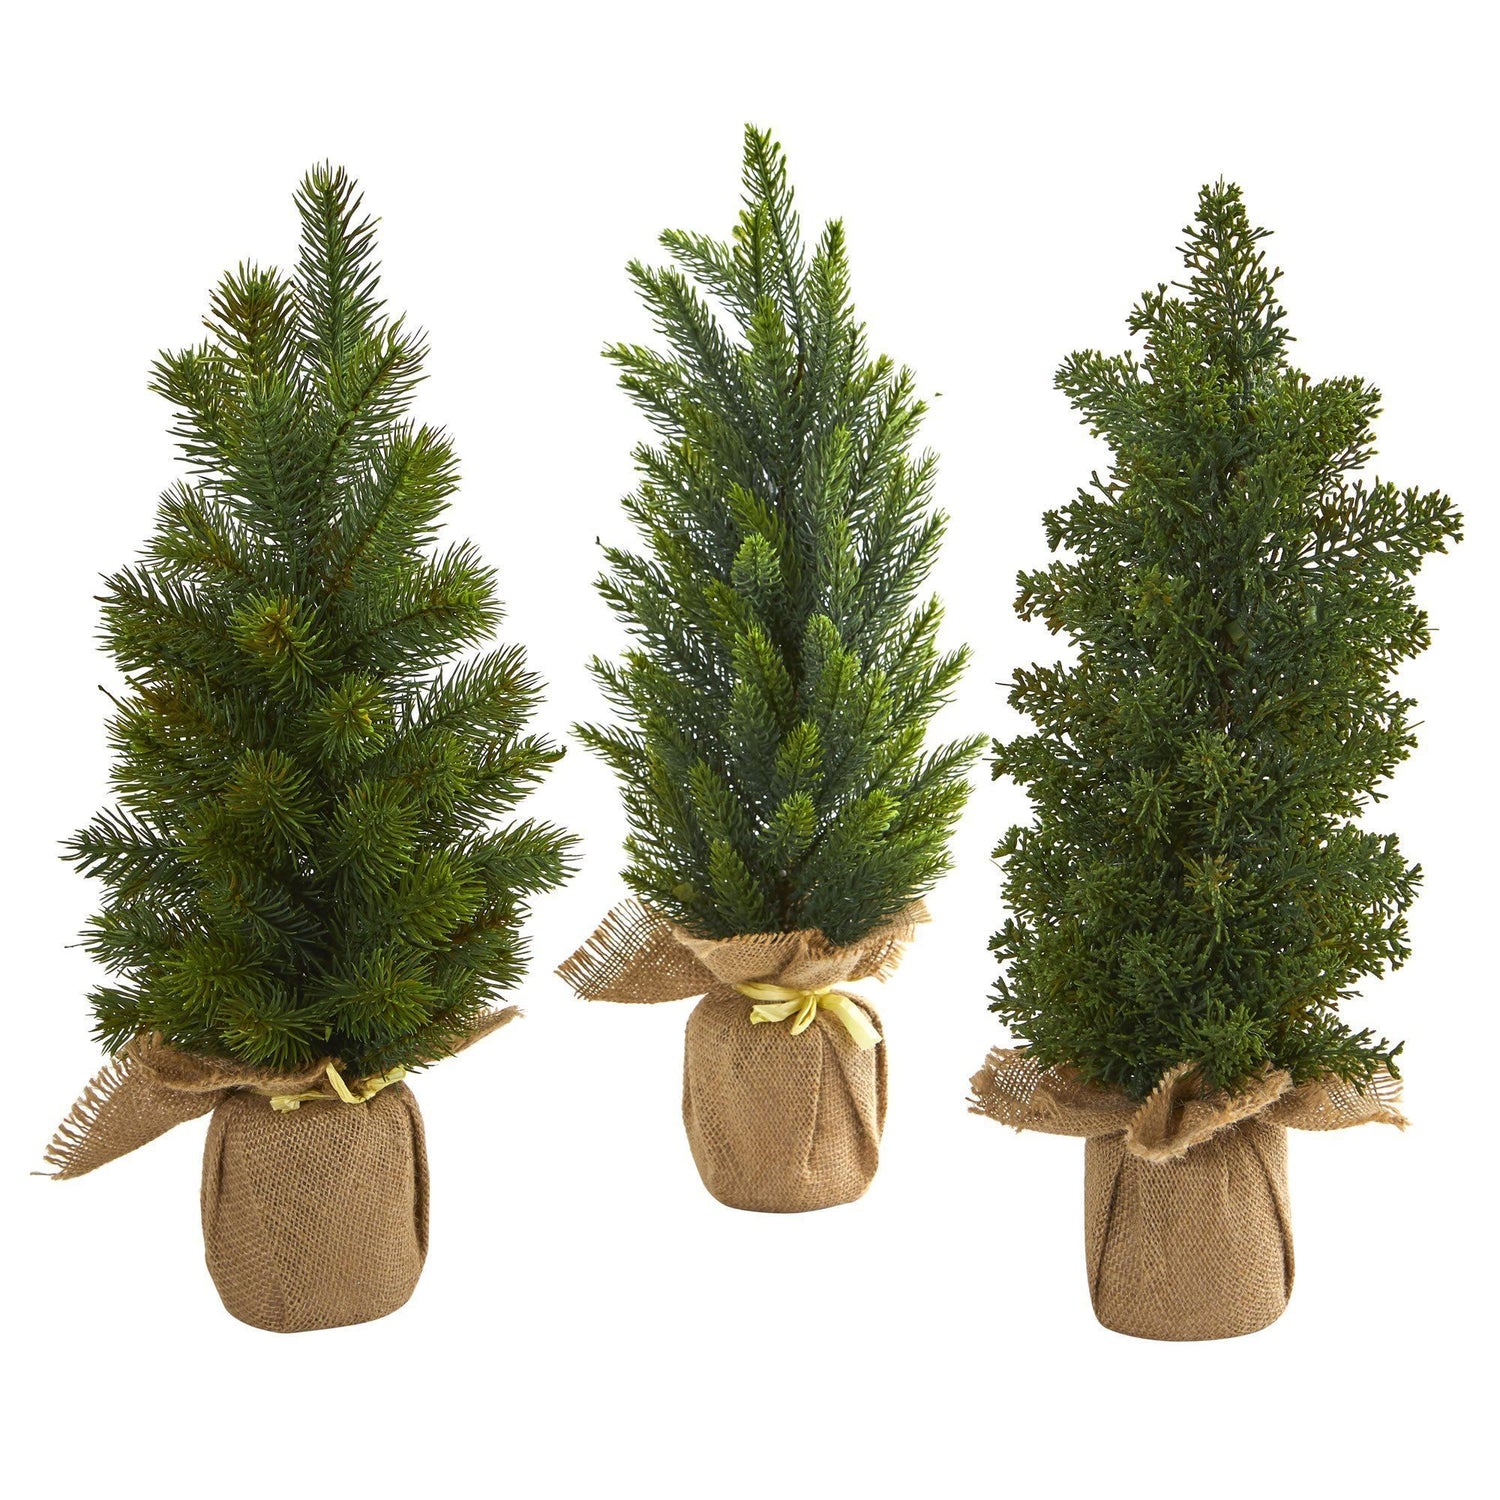 15” Mini Cypress and Pine Artificial Christmas Tree (Set of 3)